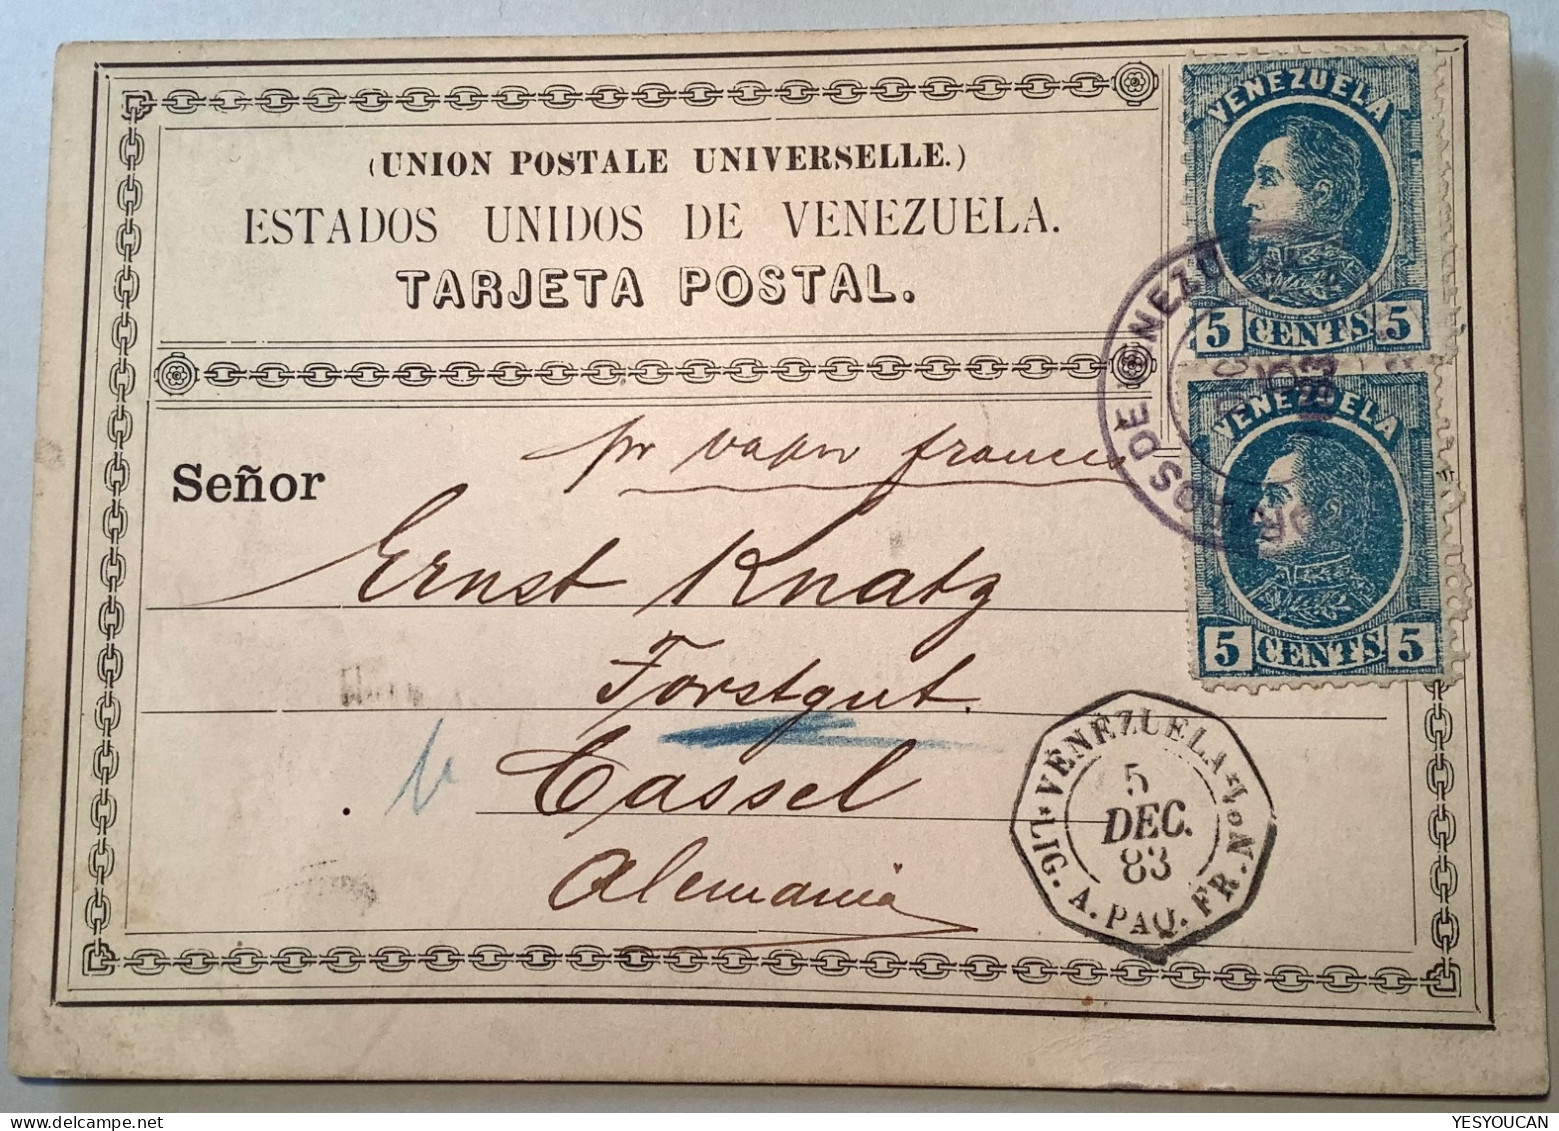 Venezuela Very Rare 1883 TARJETA POSTAL Postal Stationery Card Formular H&G1 Used (France Poste Maritime Cover Postcard - Venezuela